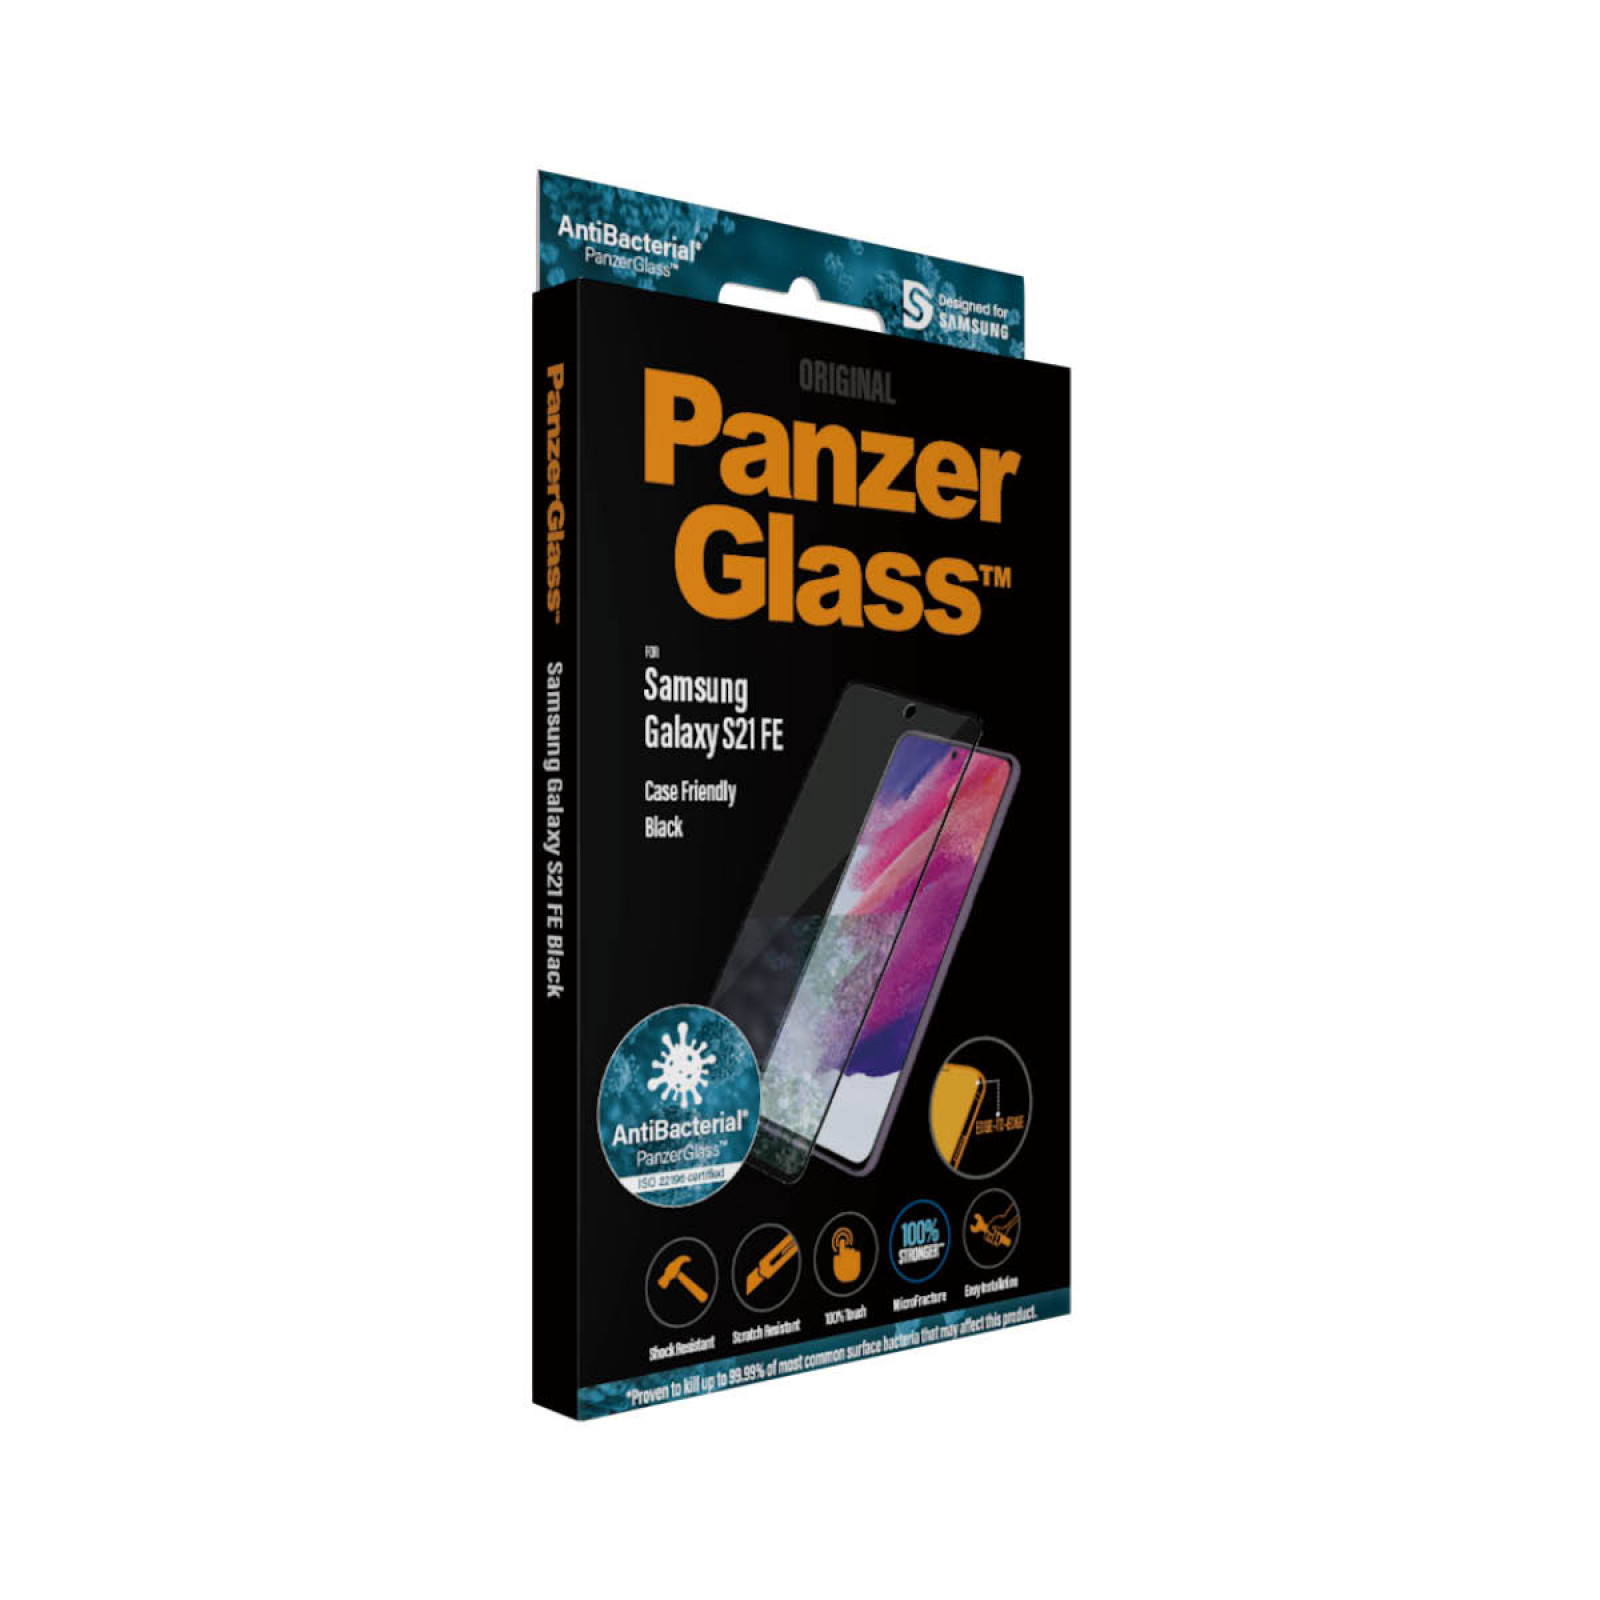 Стъклен протектор PanzerGlass за Samsung Galaxy S21 FE AntiBacterial CaseFriendly - Черен